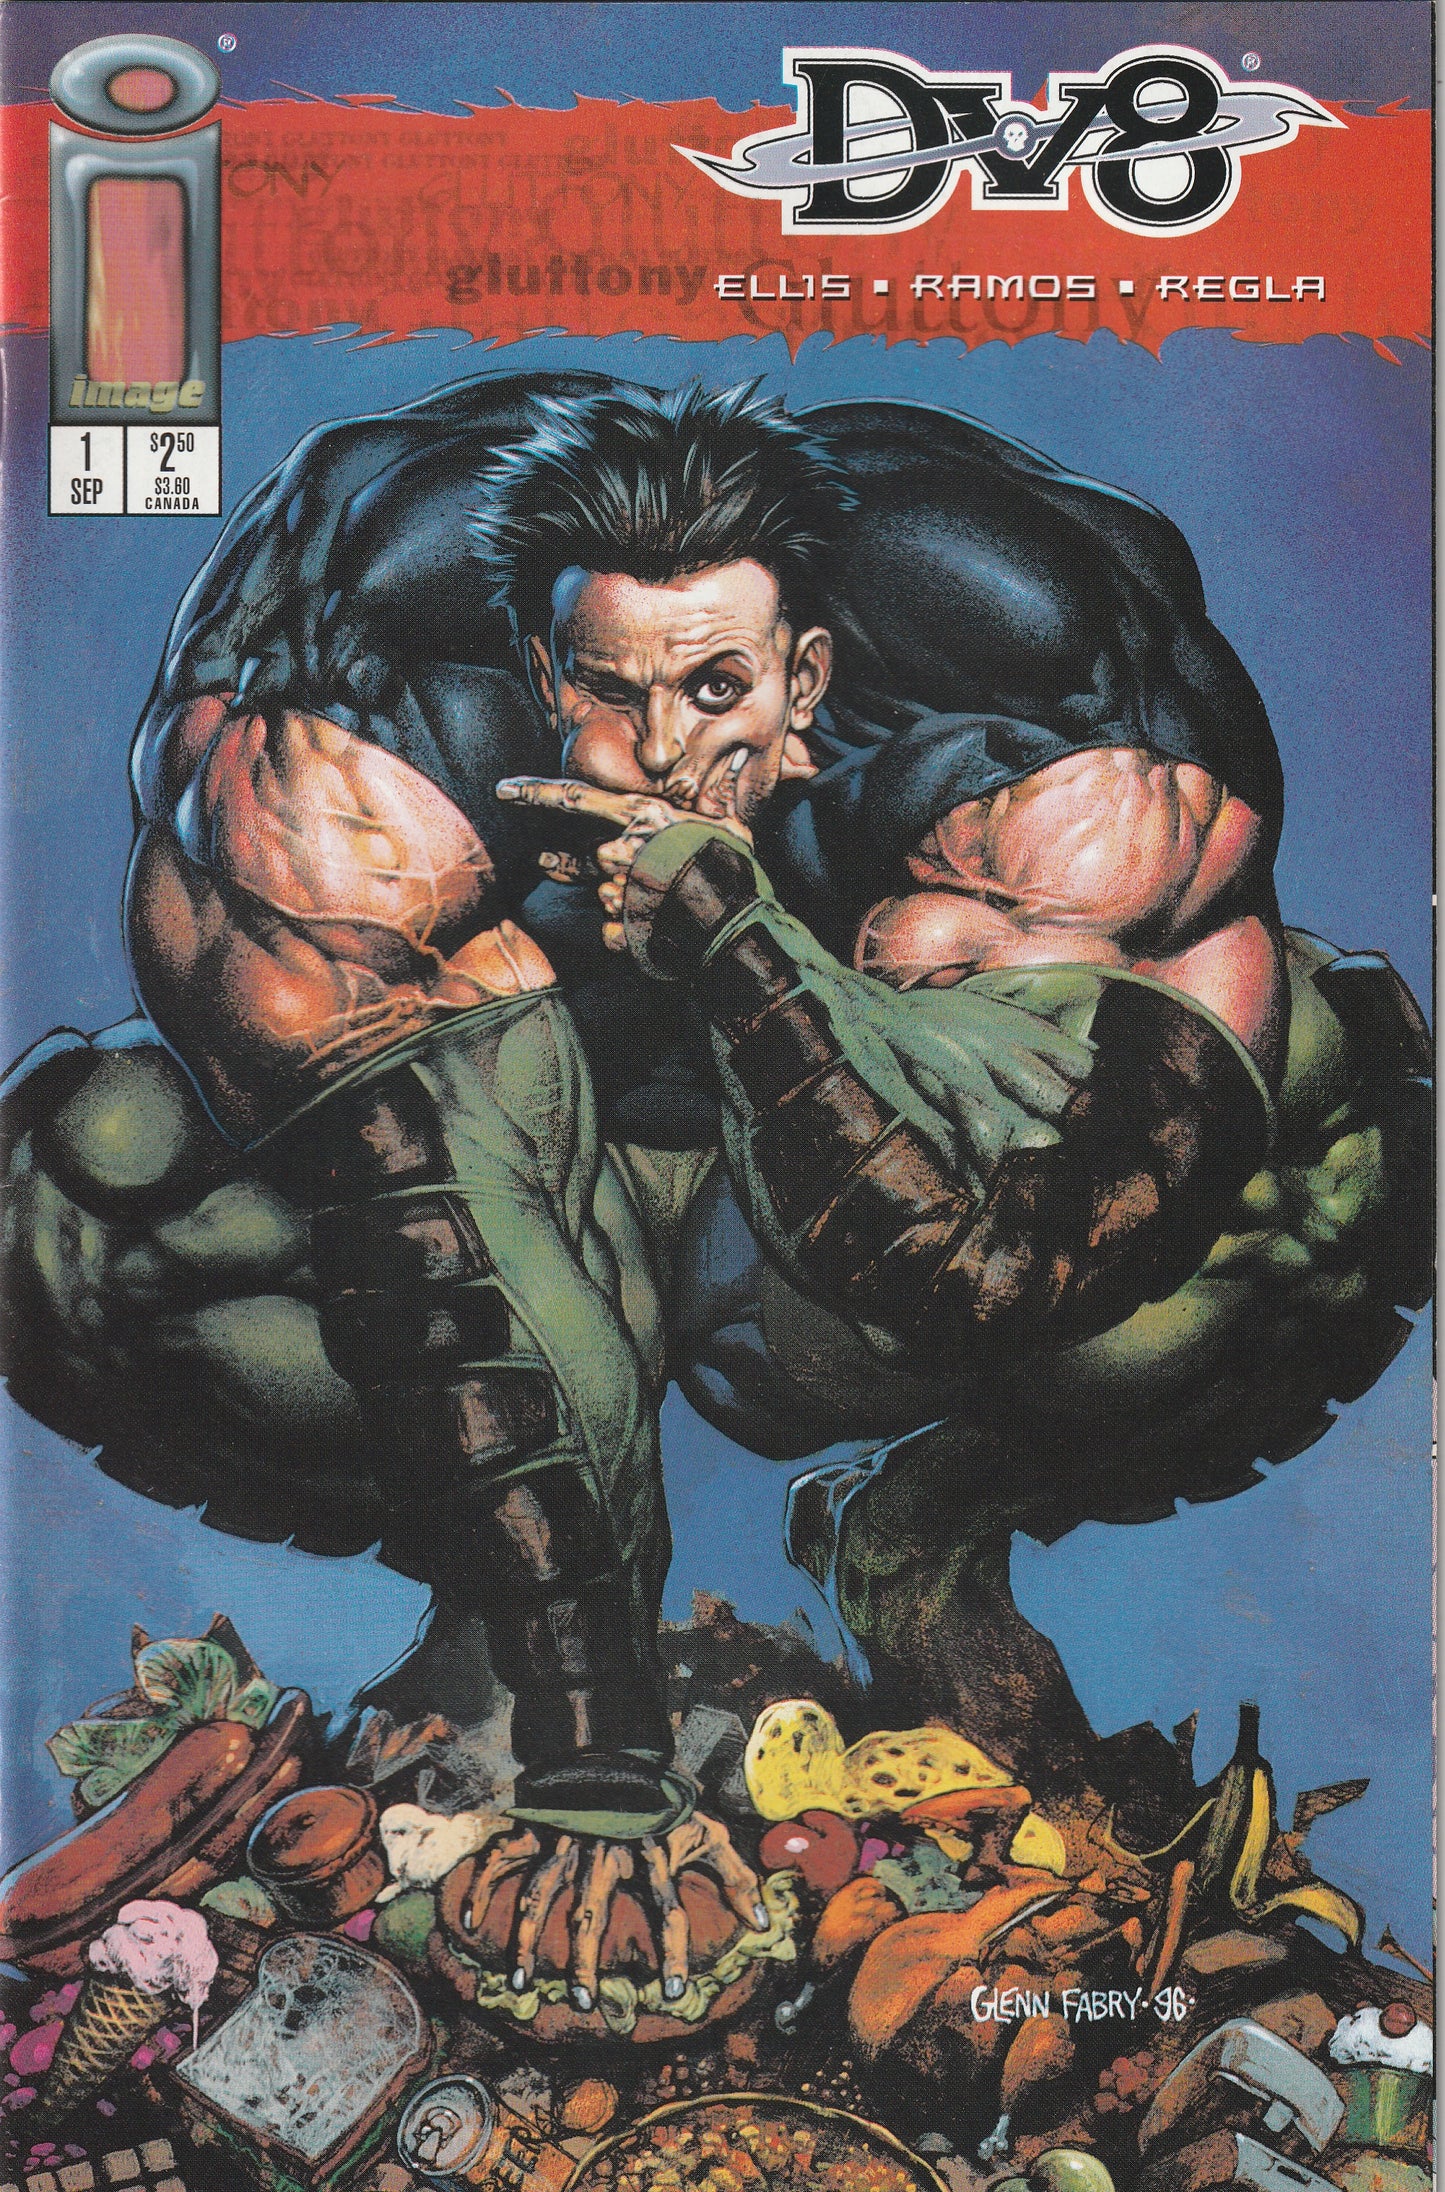 DV8 #1 (1996) - Cover B Gluttony (Glenn Fabry)